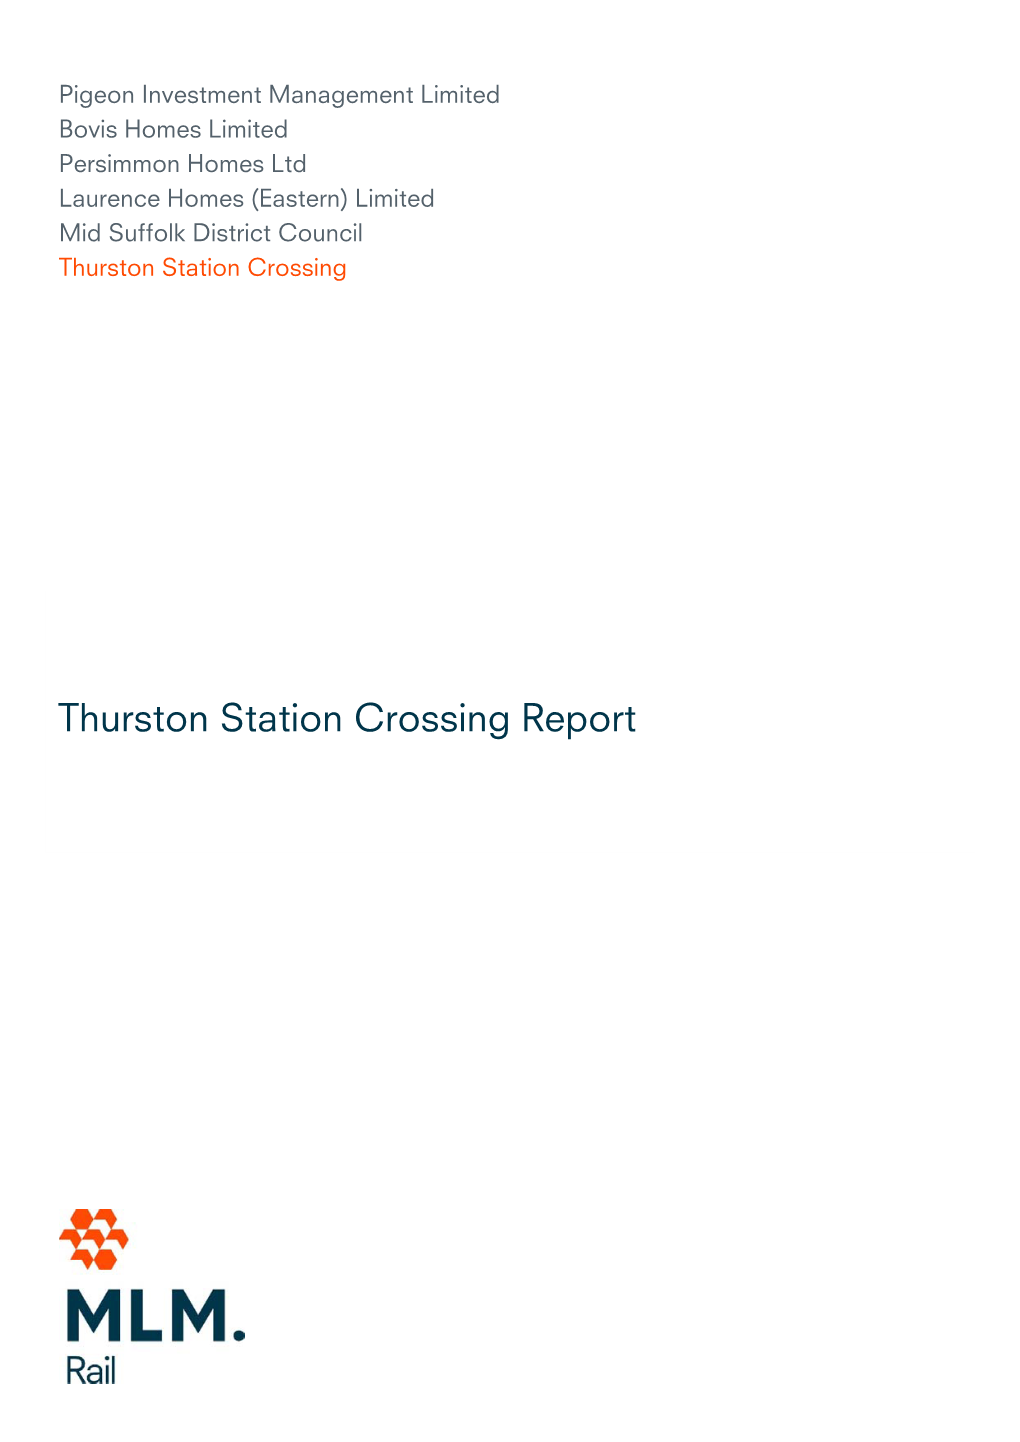 Thurston Station Crossing Report